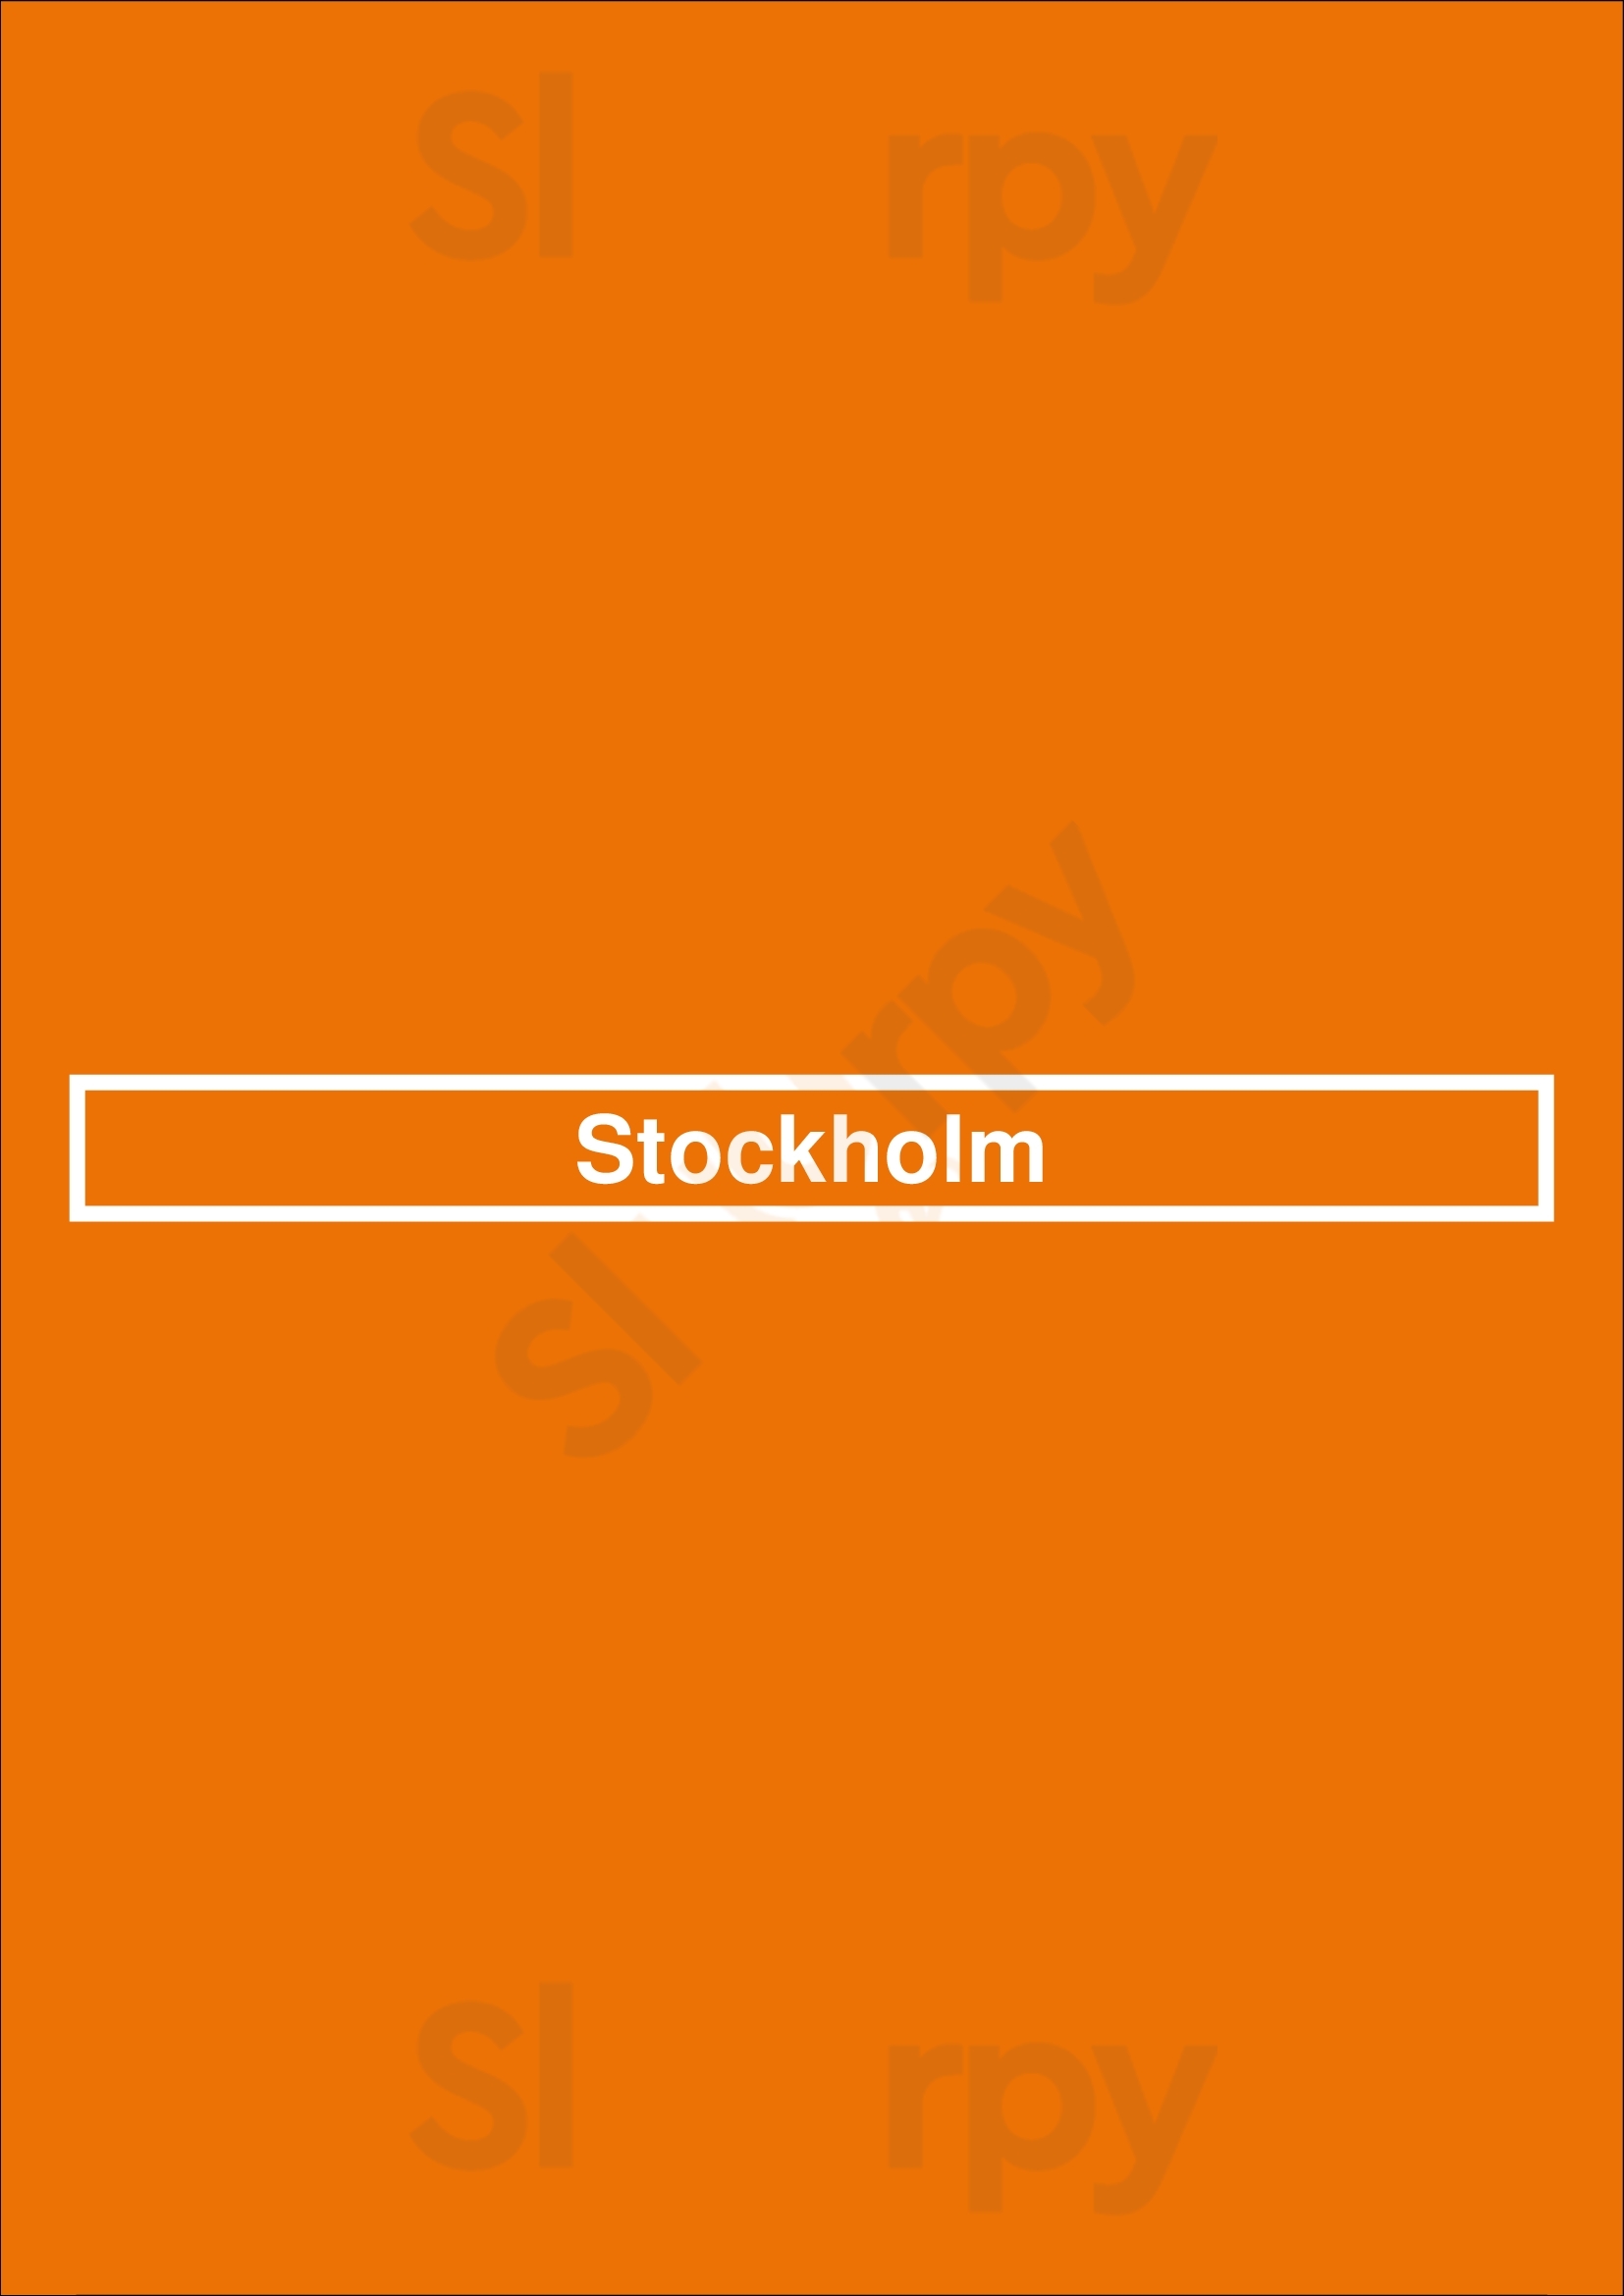 Stockholm Rotterdam Menu - 1